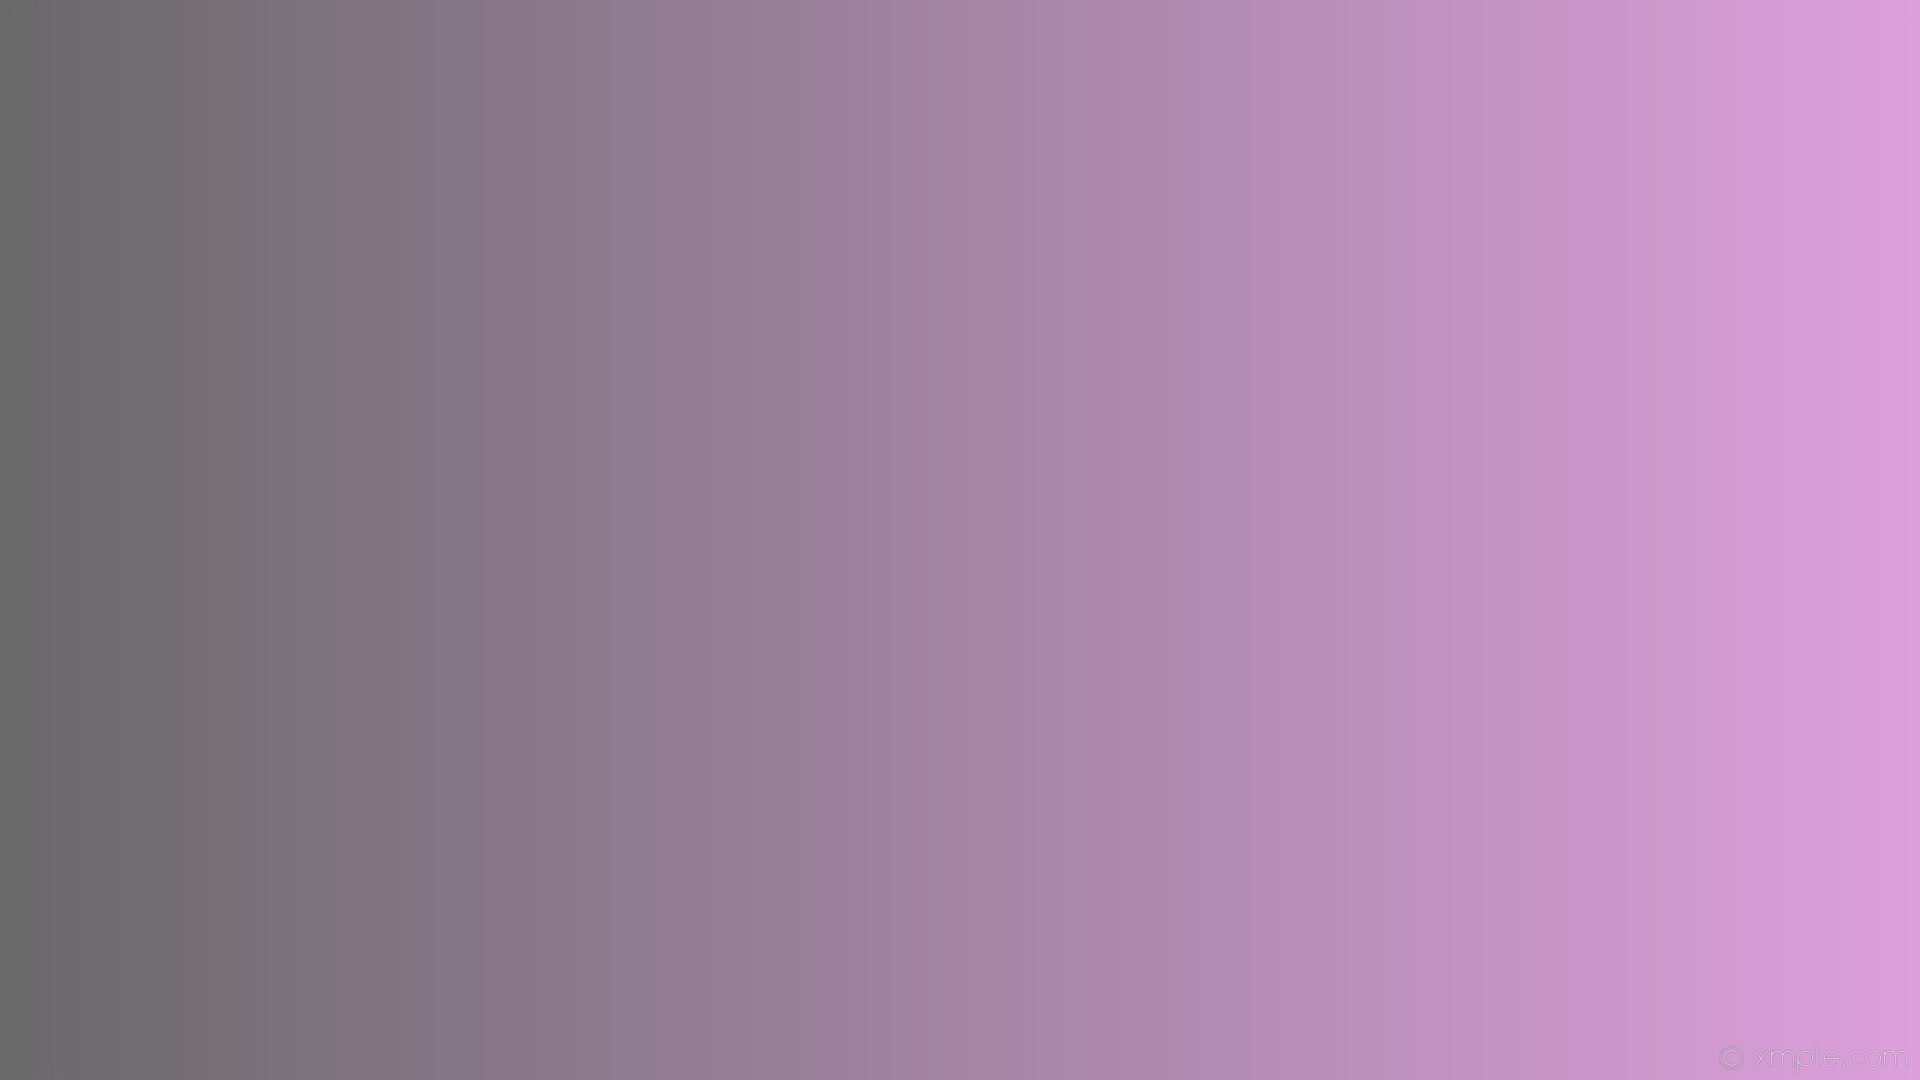 1920x1080 wallpaper linear purple grey gradient plum dim gray #dda0dd #696969 0Â°